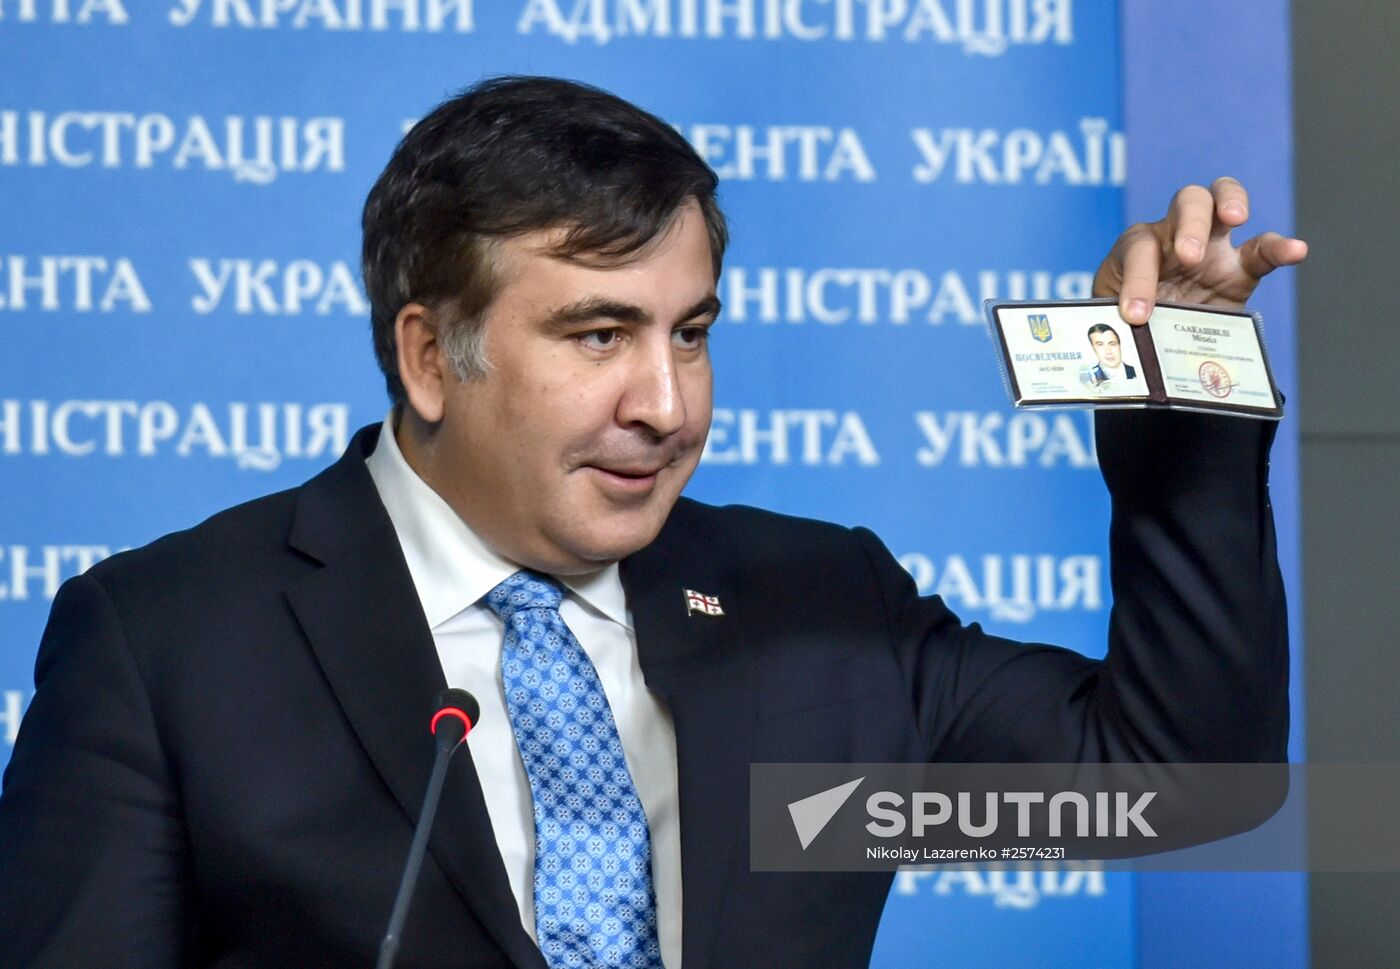 Georgian former President and the Ukrainian President's Aide Mikheil Saakashvili